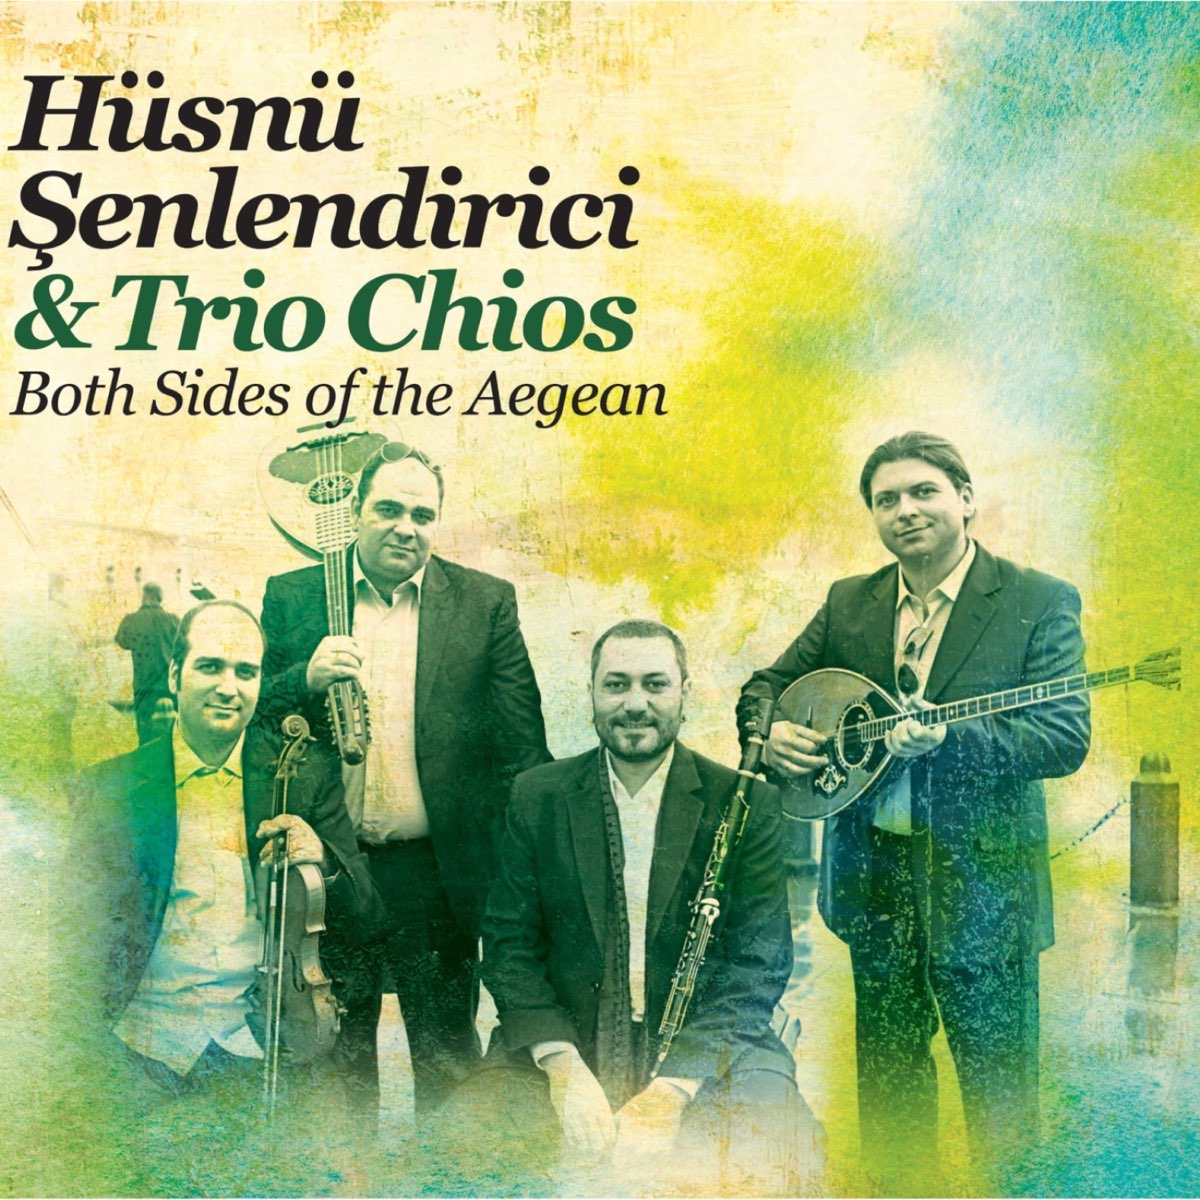 Both Sides of the Aegean by Trio Chios & Hüsnü Senlendirici on Apple Music